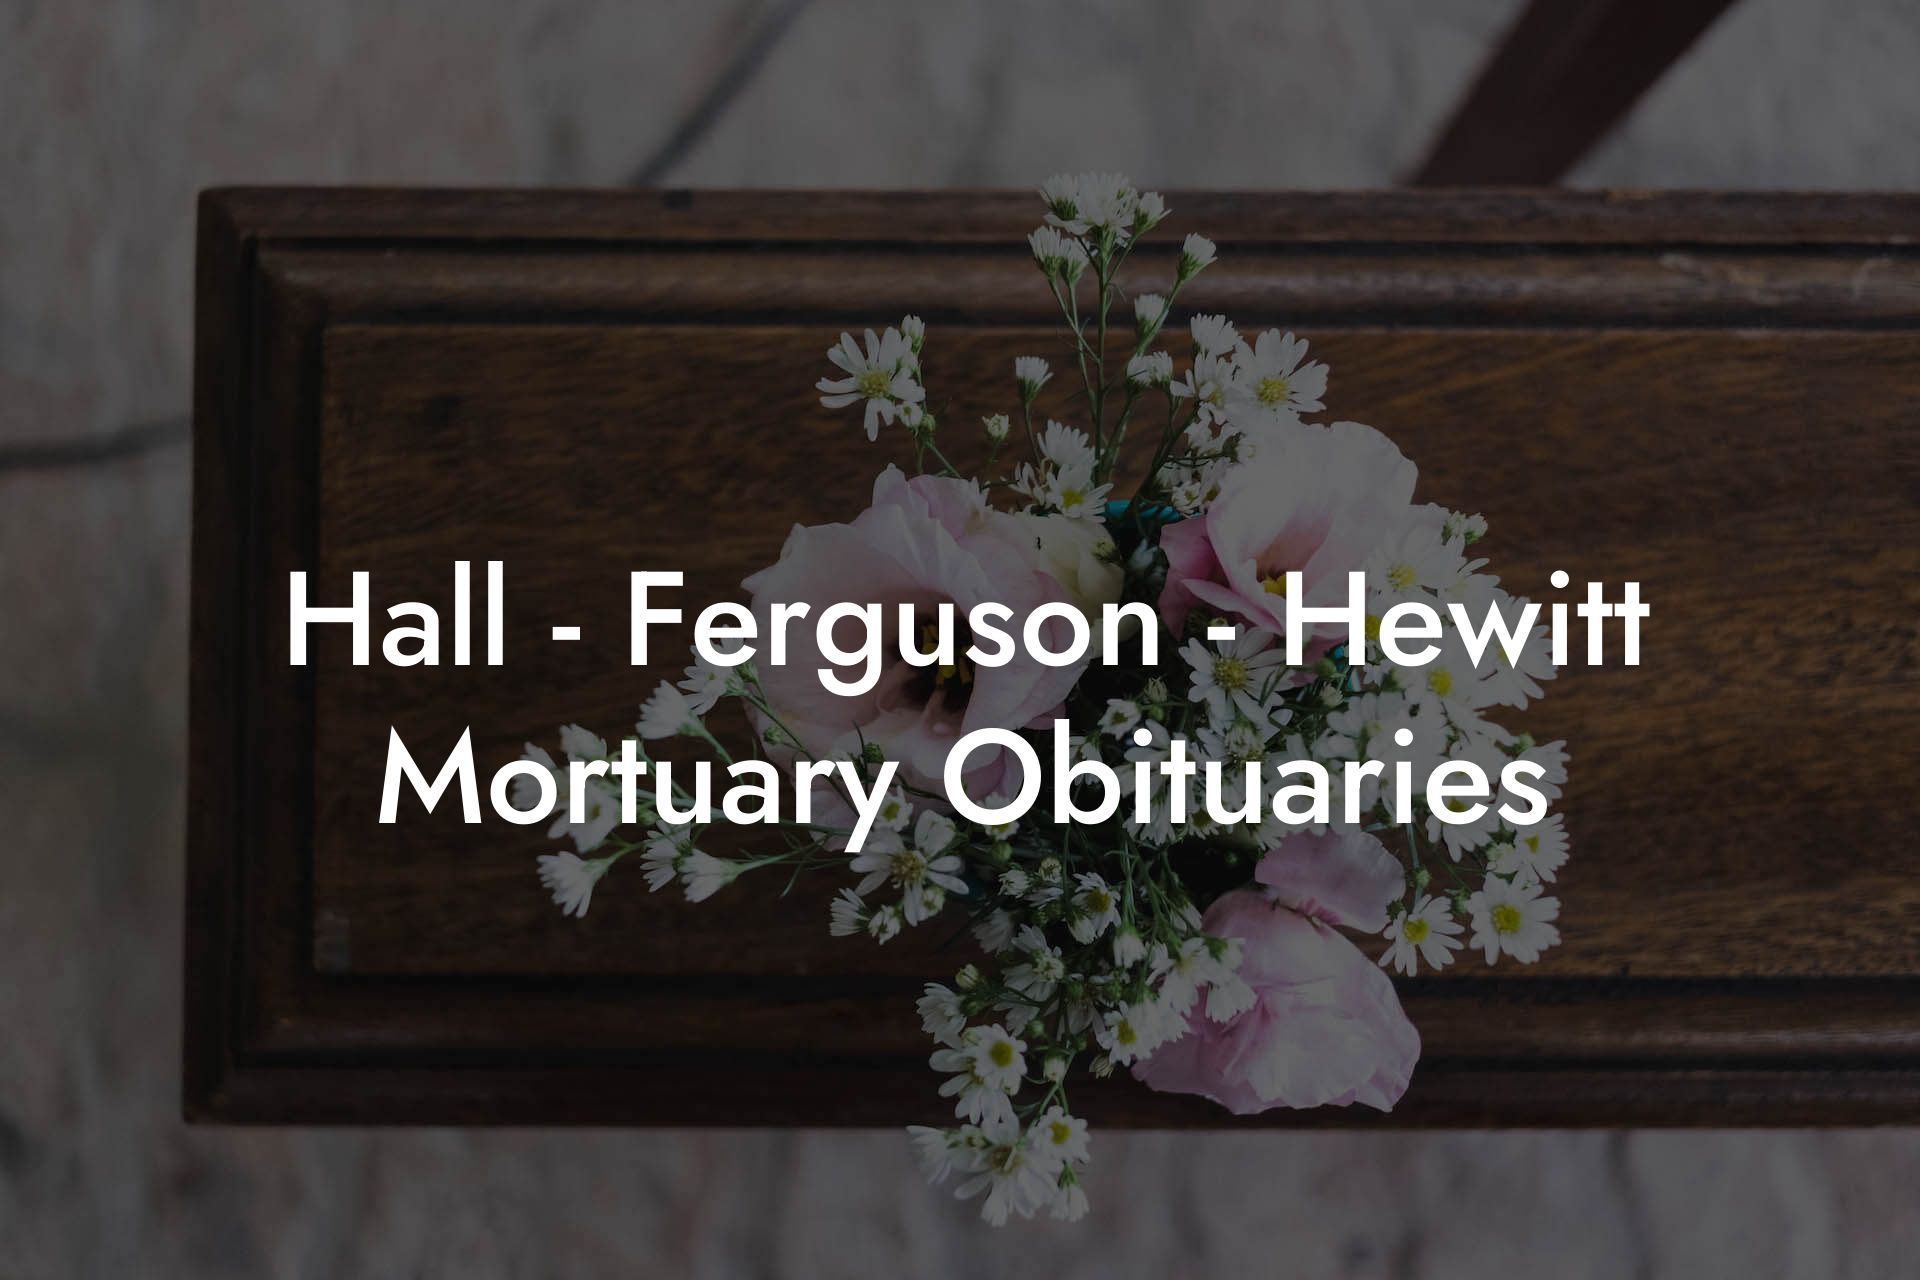 Hall - Ferguson - Hewitt Mortuary Obituaries